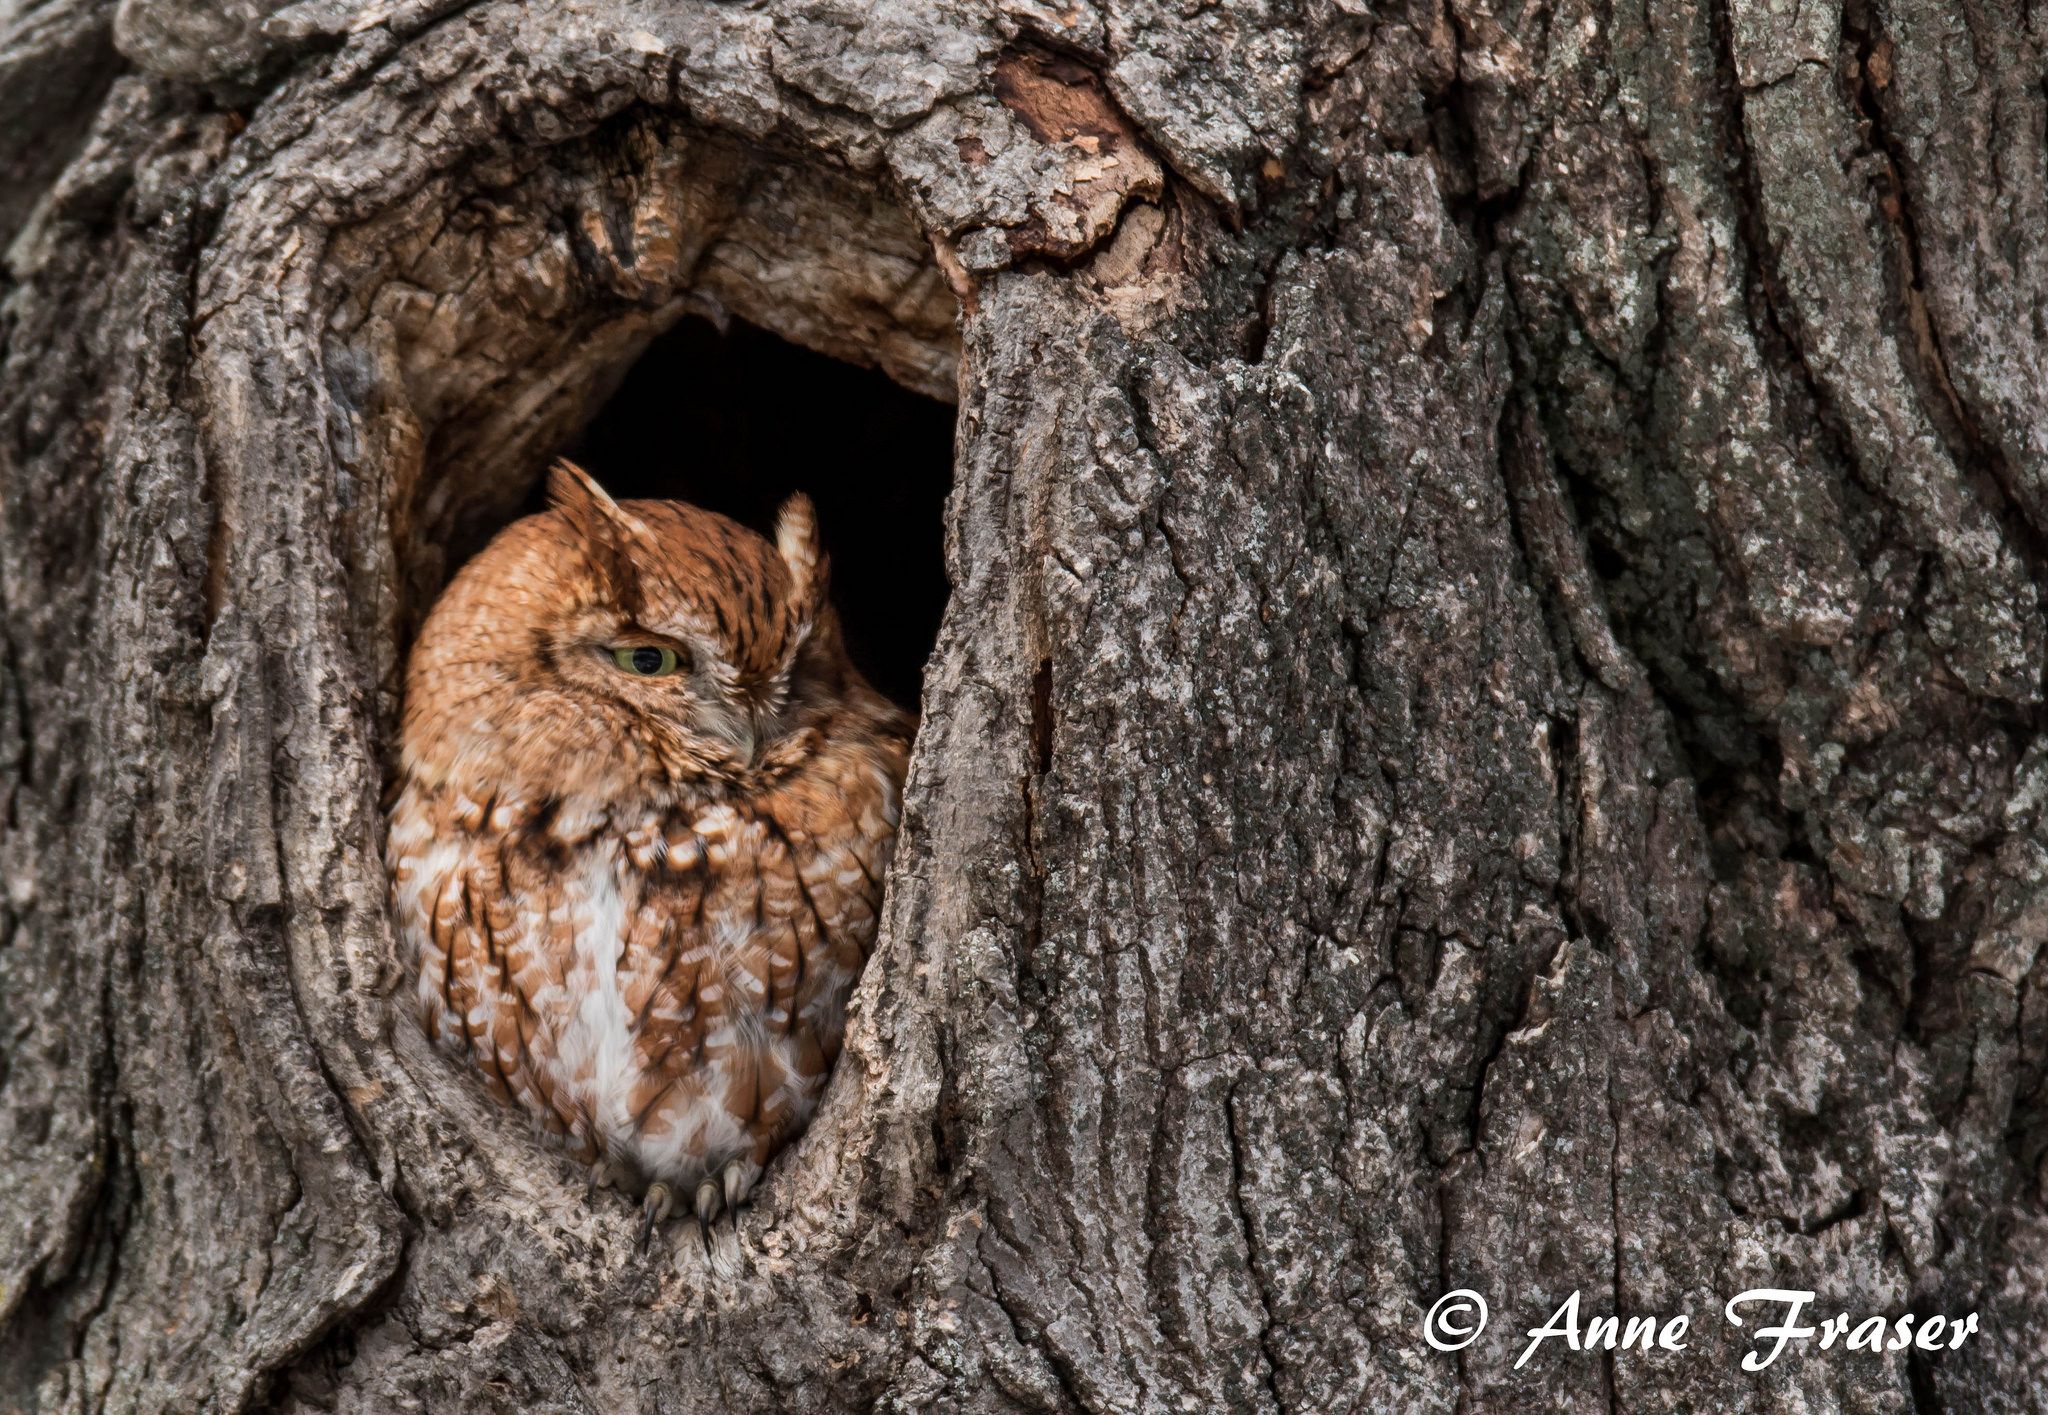 Screech owl by Anne Fraser